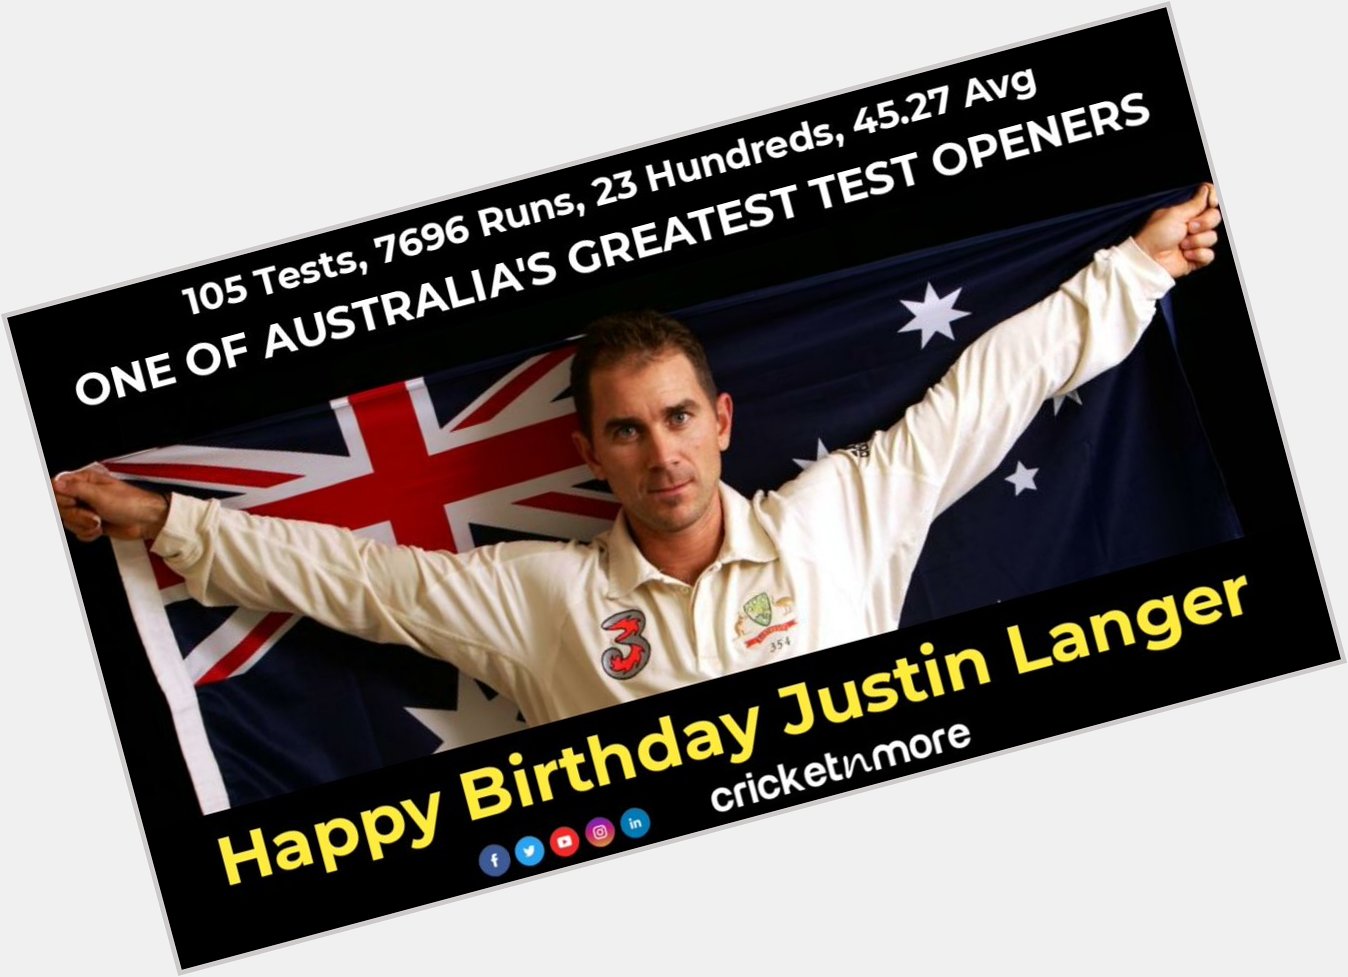 Happy Birthday Justin Langer.
.
.     